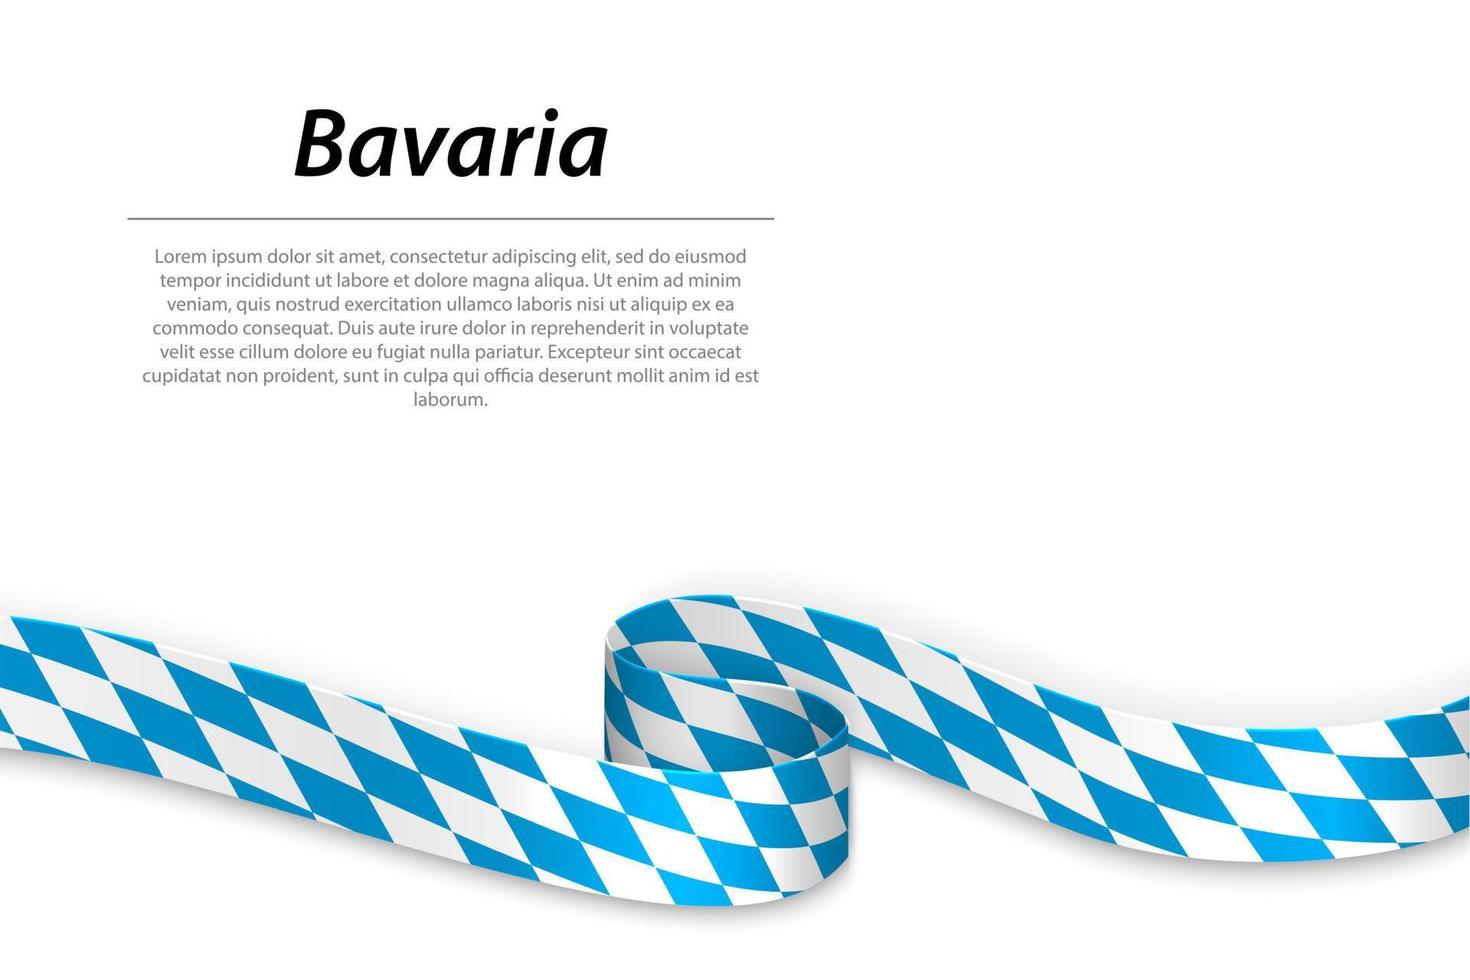 ondulación cinta o bandera con bandera de Baviera vector